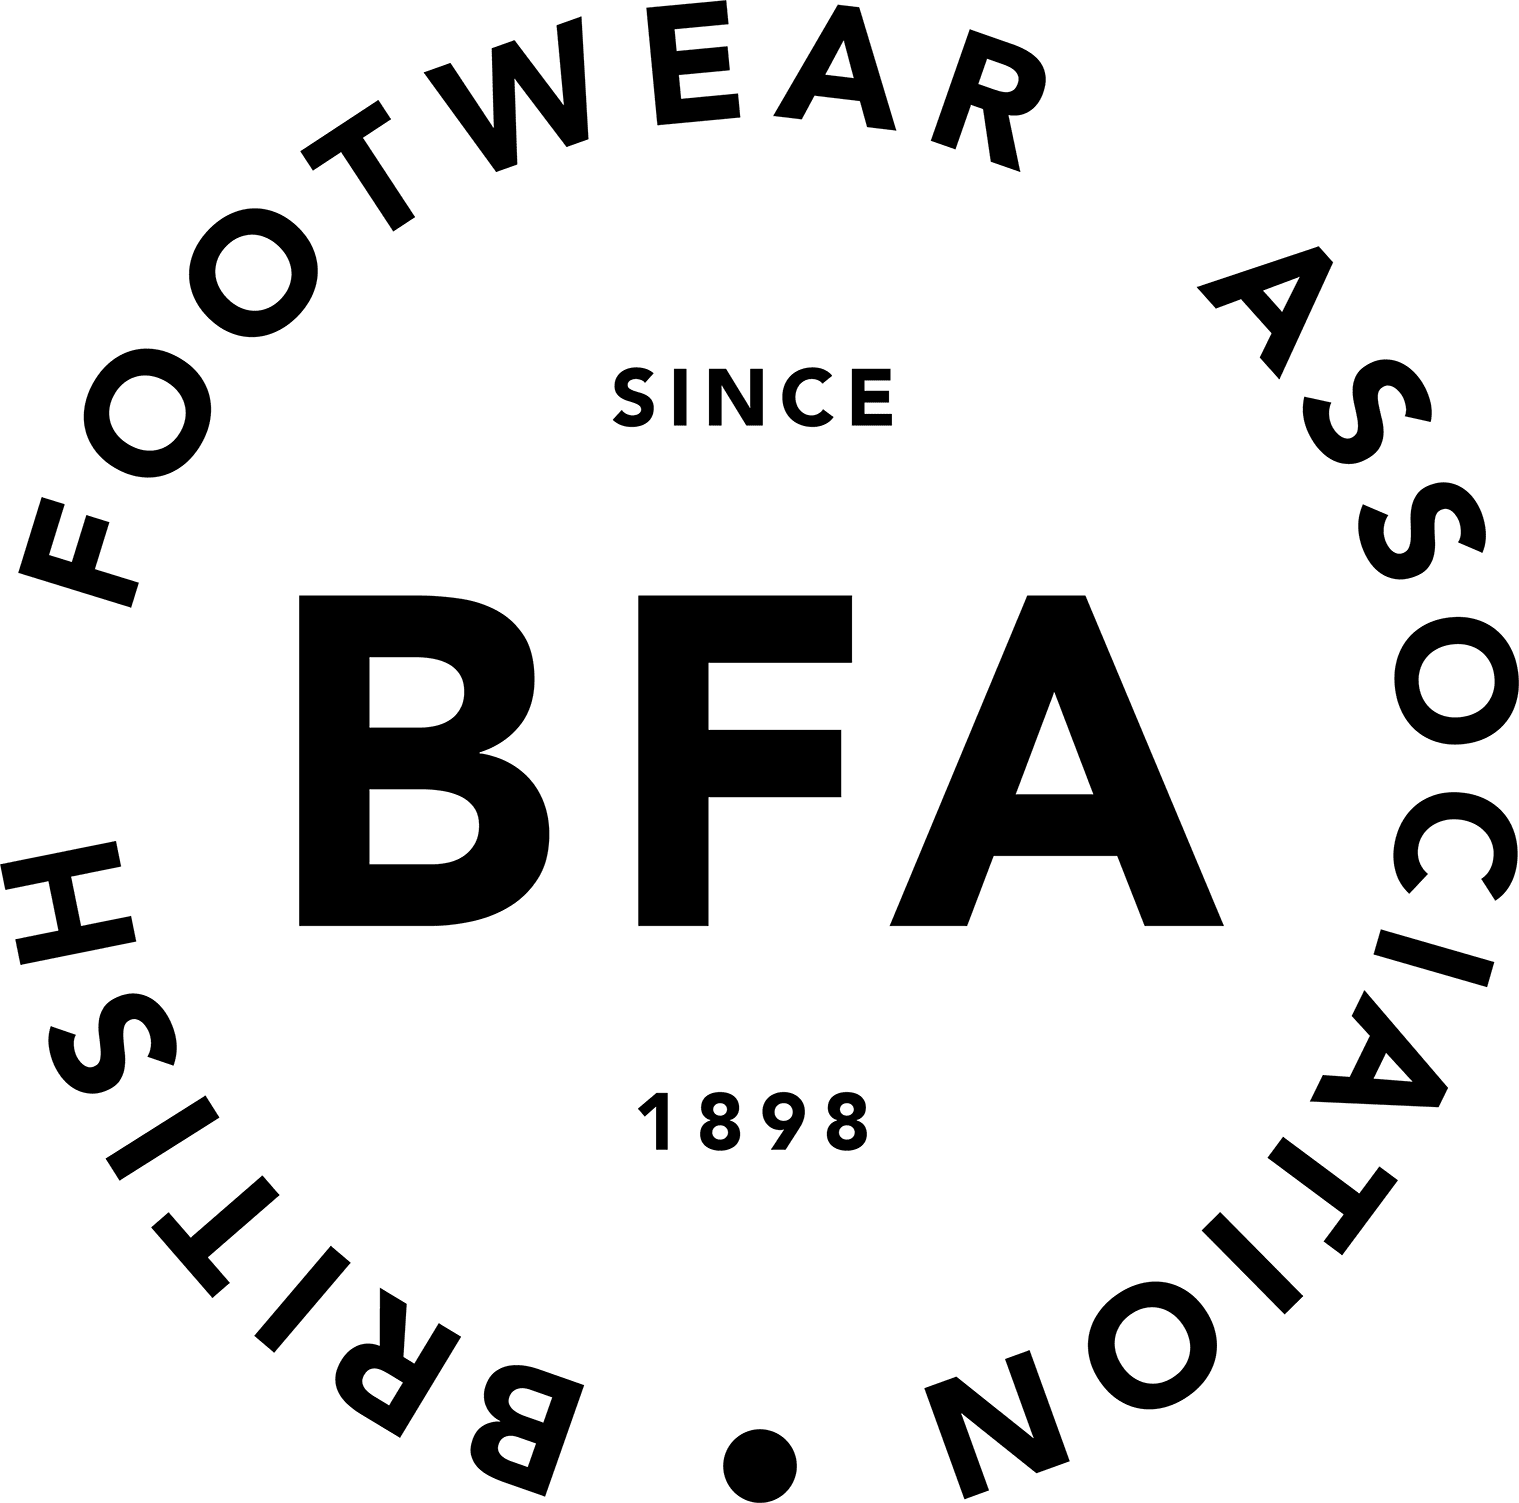 The British Footwear Association logo.